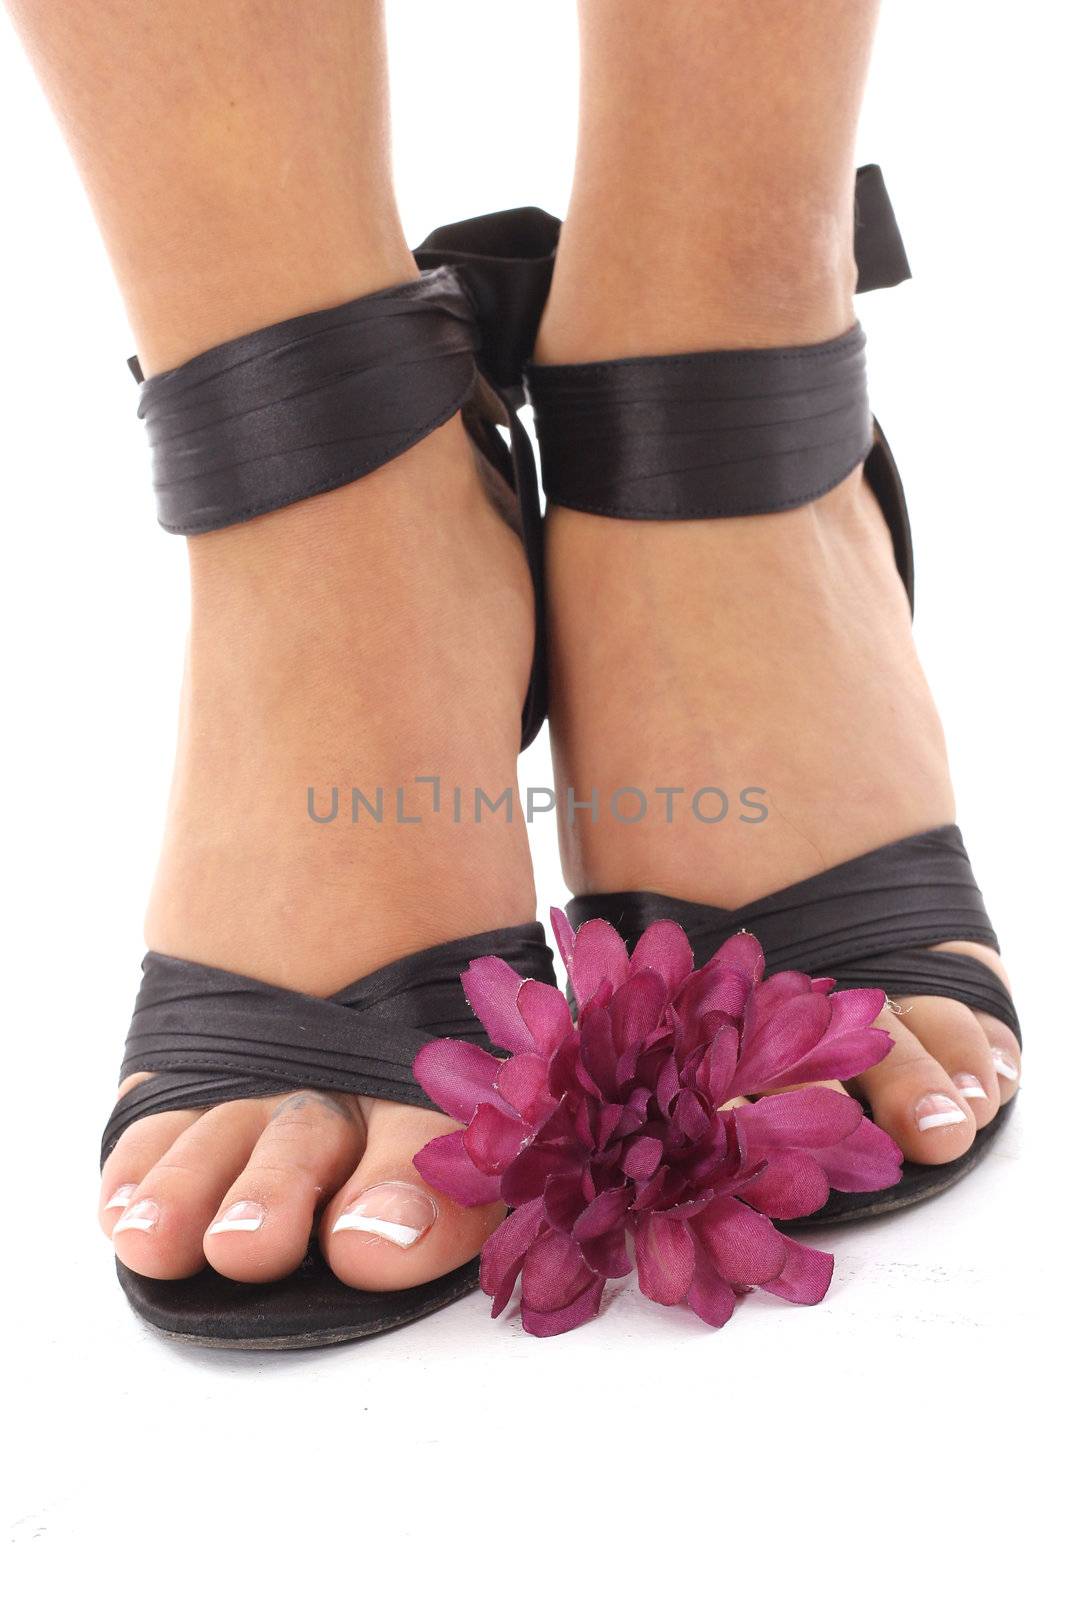 beautifully manicured feet with purple flower by creativestock